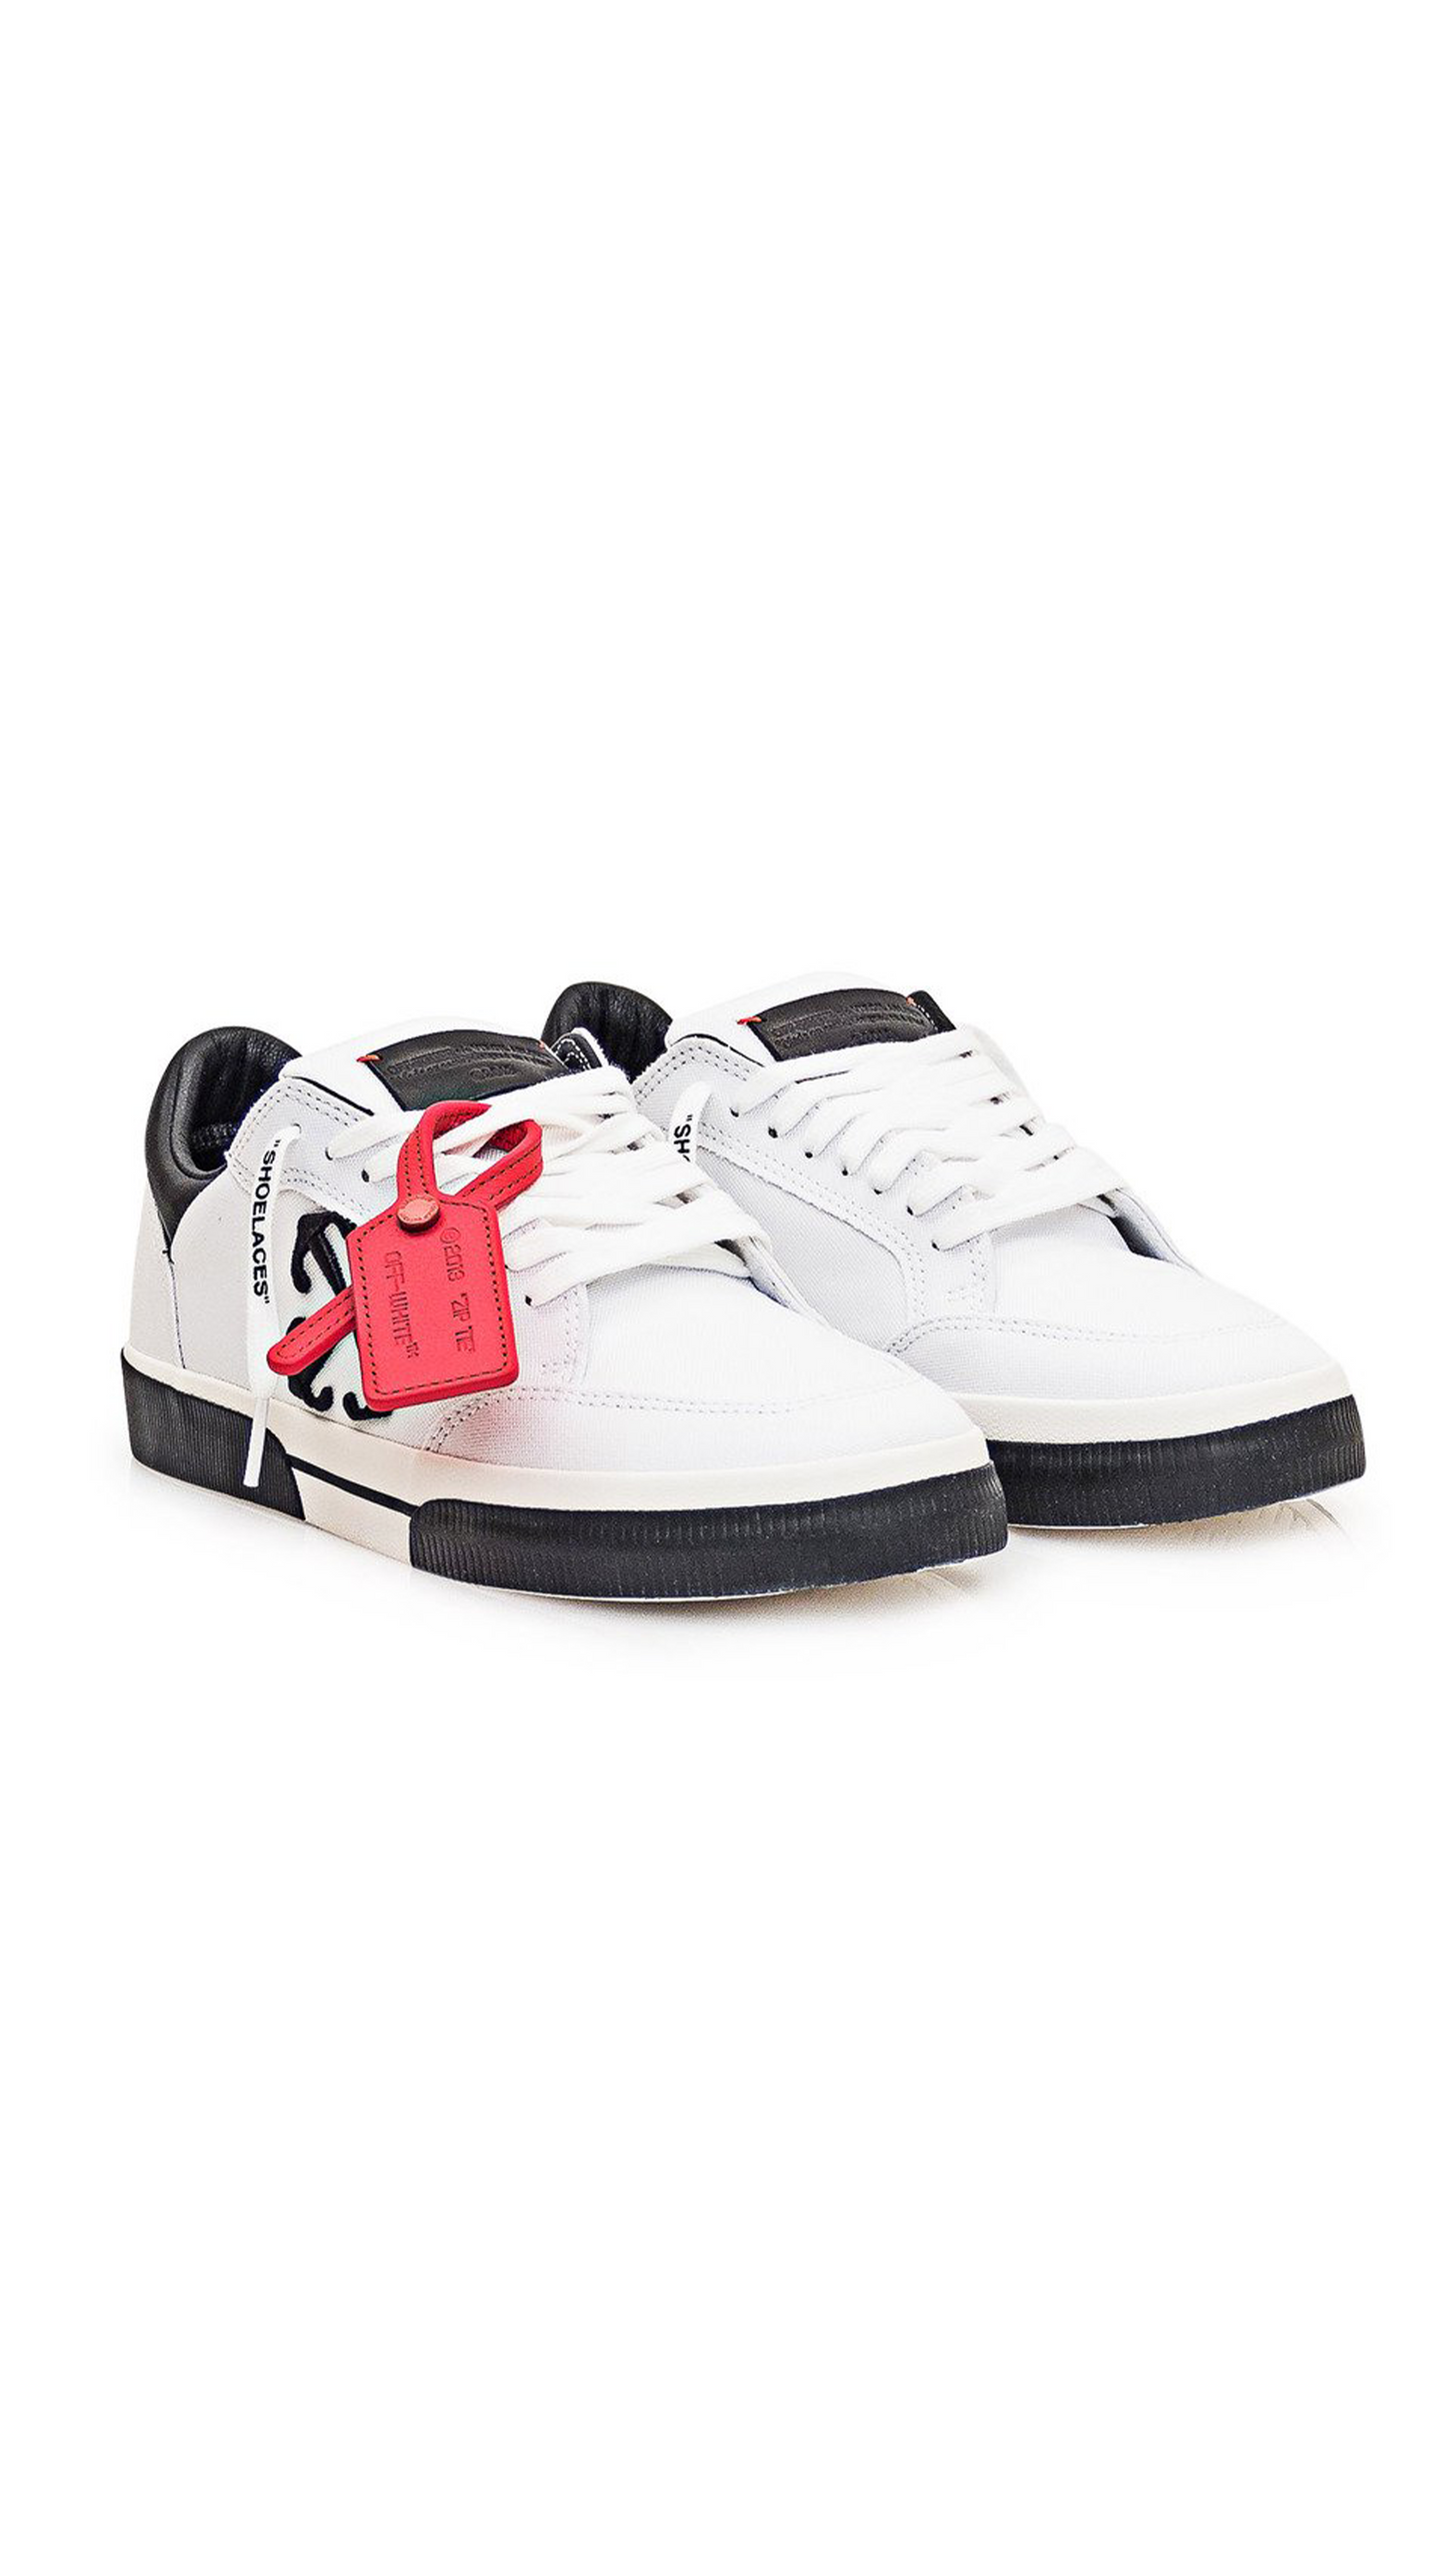 Low Vulcanize Sneaker in Canvas - White/Black